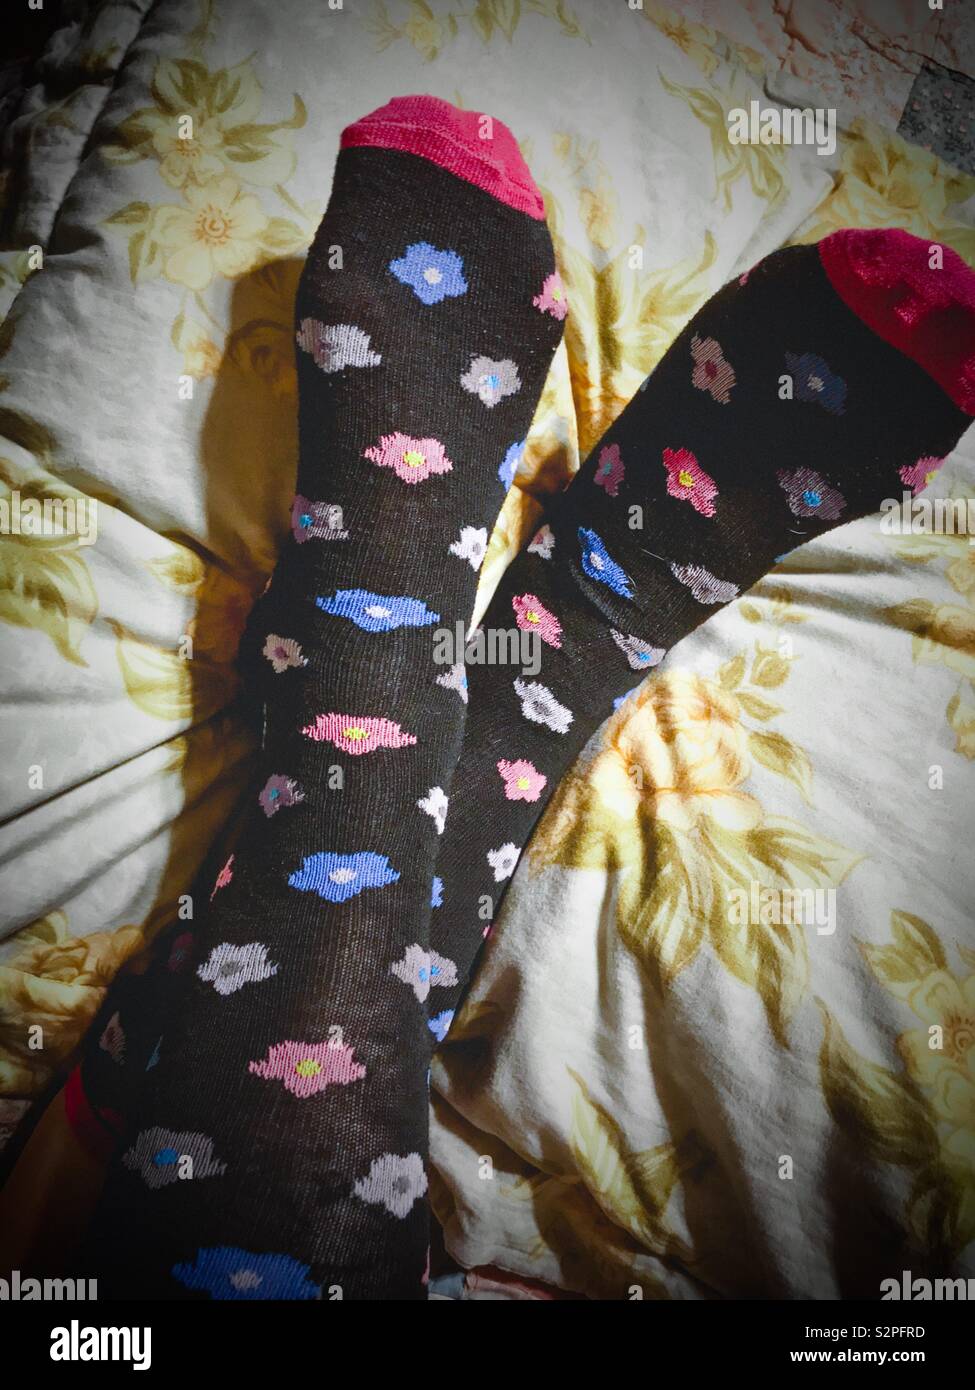 https://c8.alamy.com/comp/S2PFRD/crossed-legs-in-floral-knee-socks-propped-on-pillow-S2PFRD.jpg